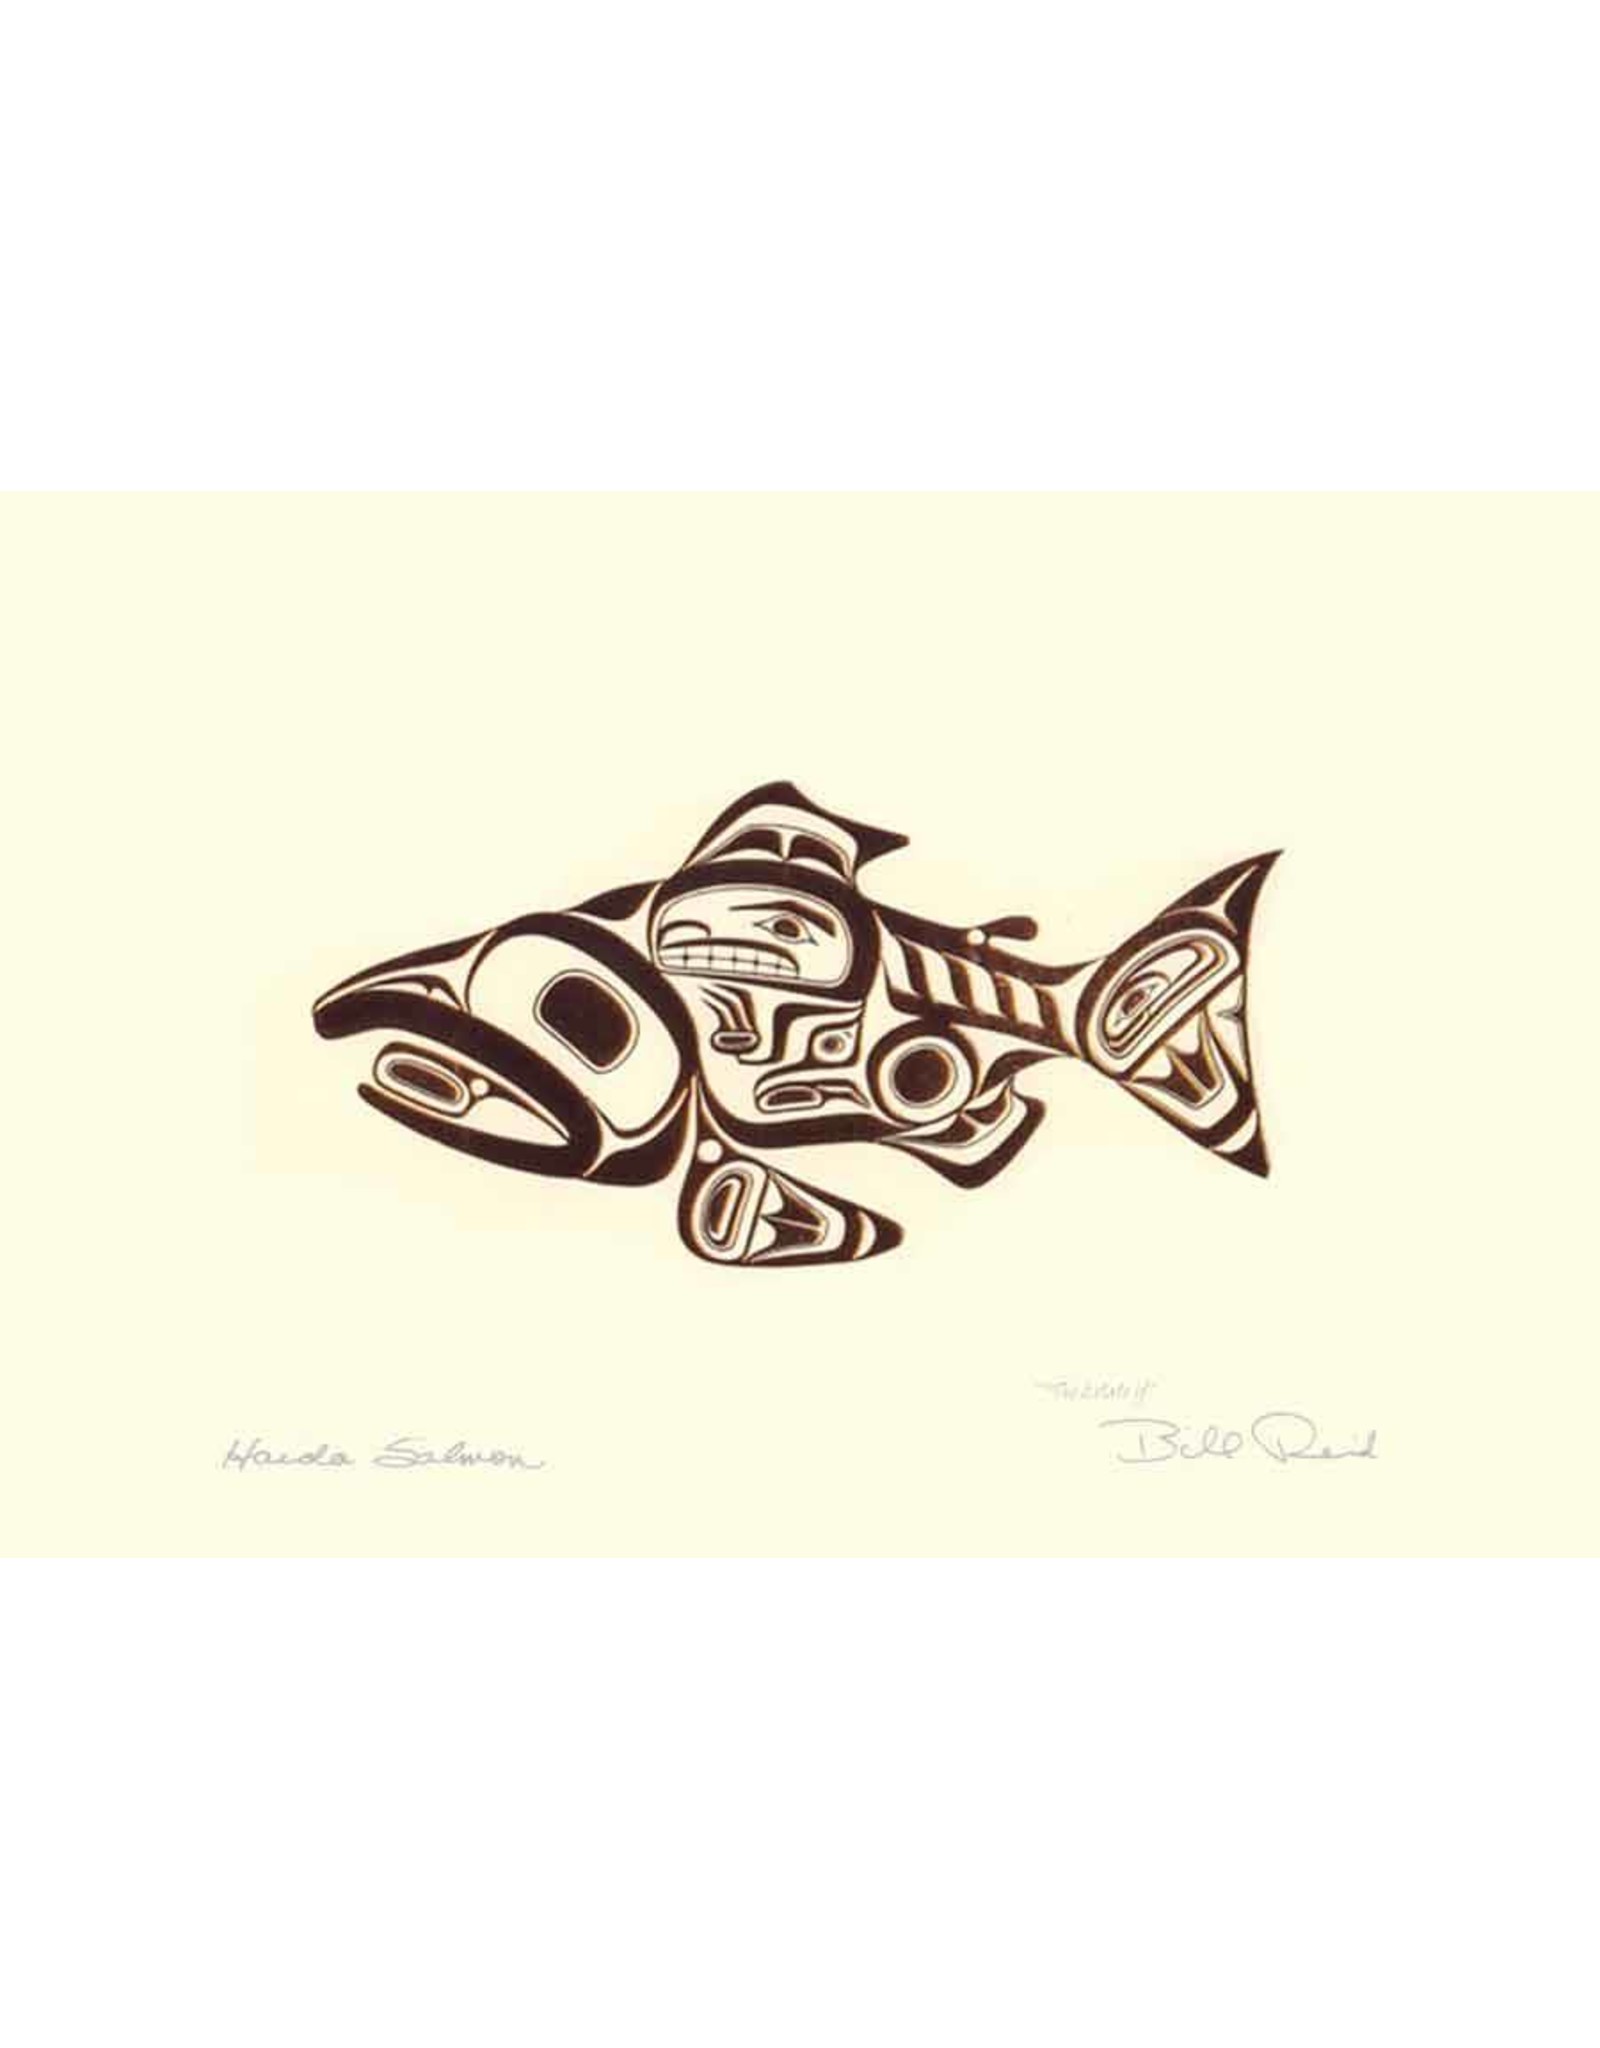 Haida Salmon par Bill Reid  Encadrée